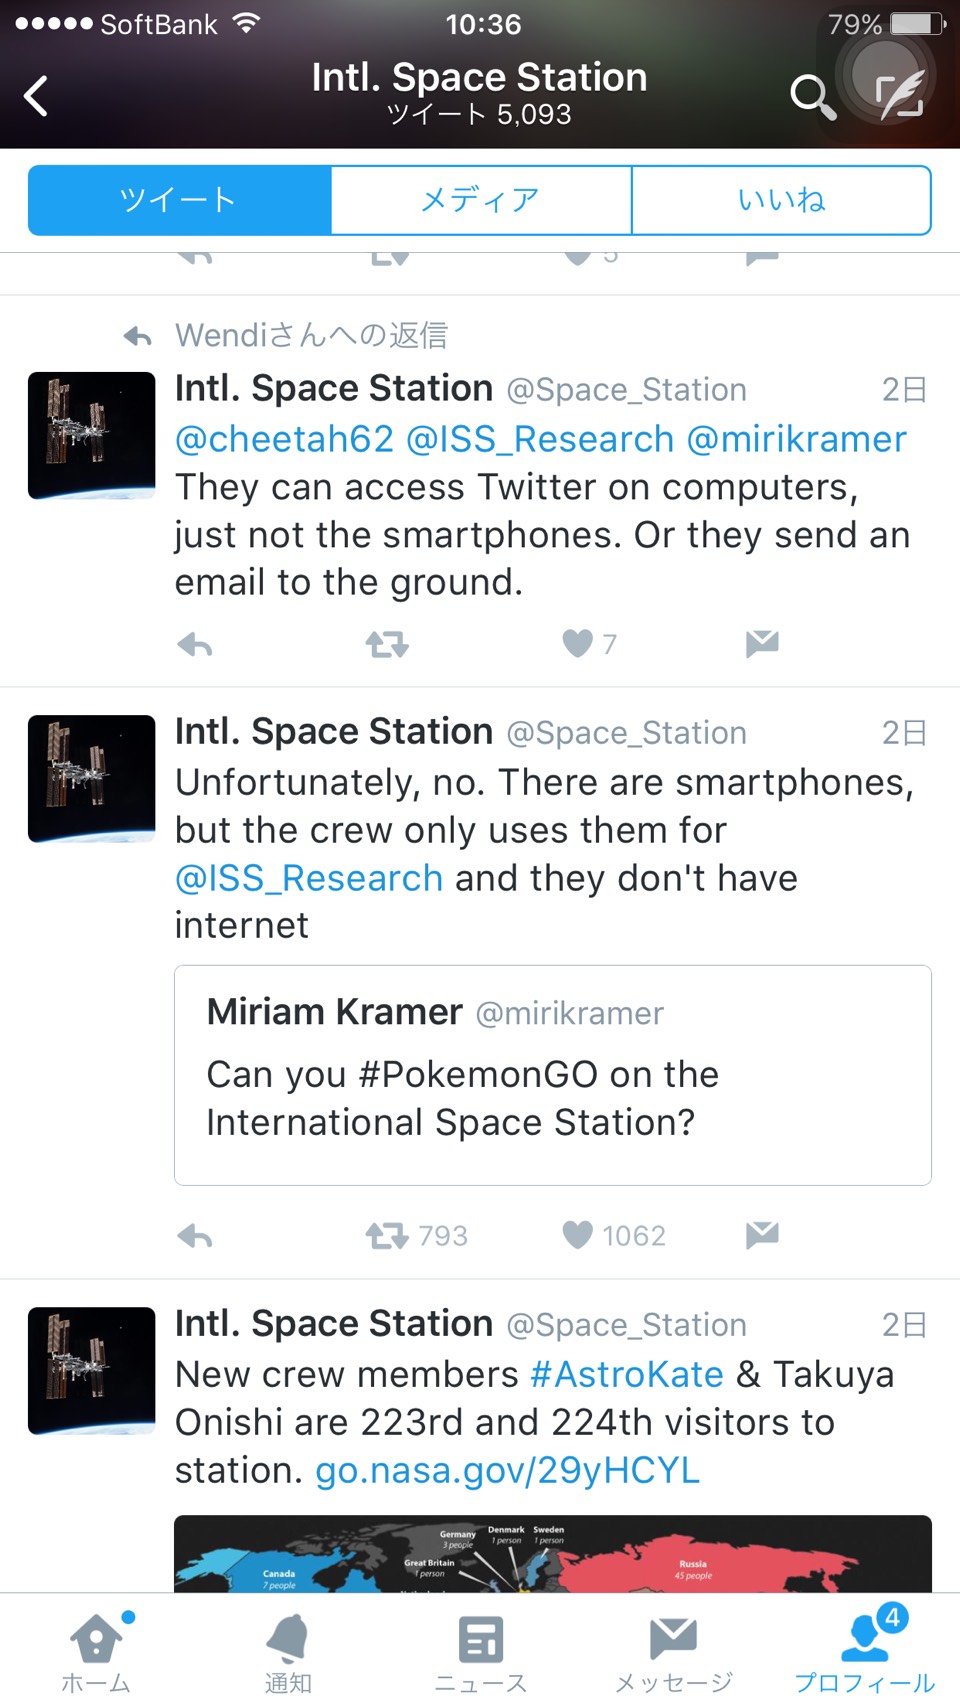 NASAのツイッター